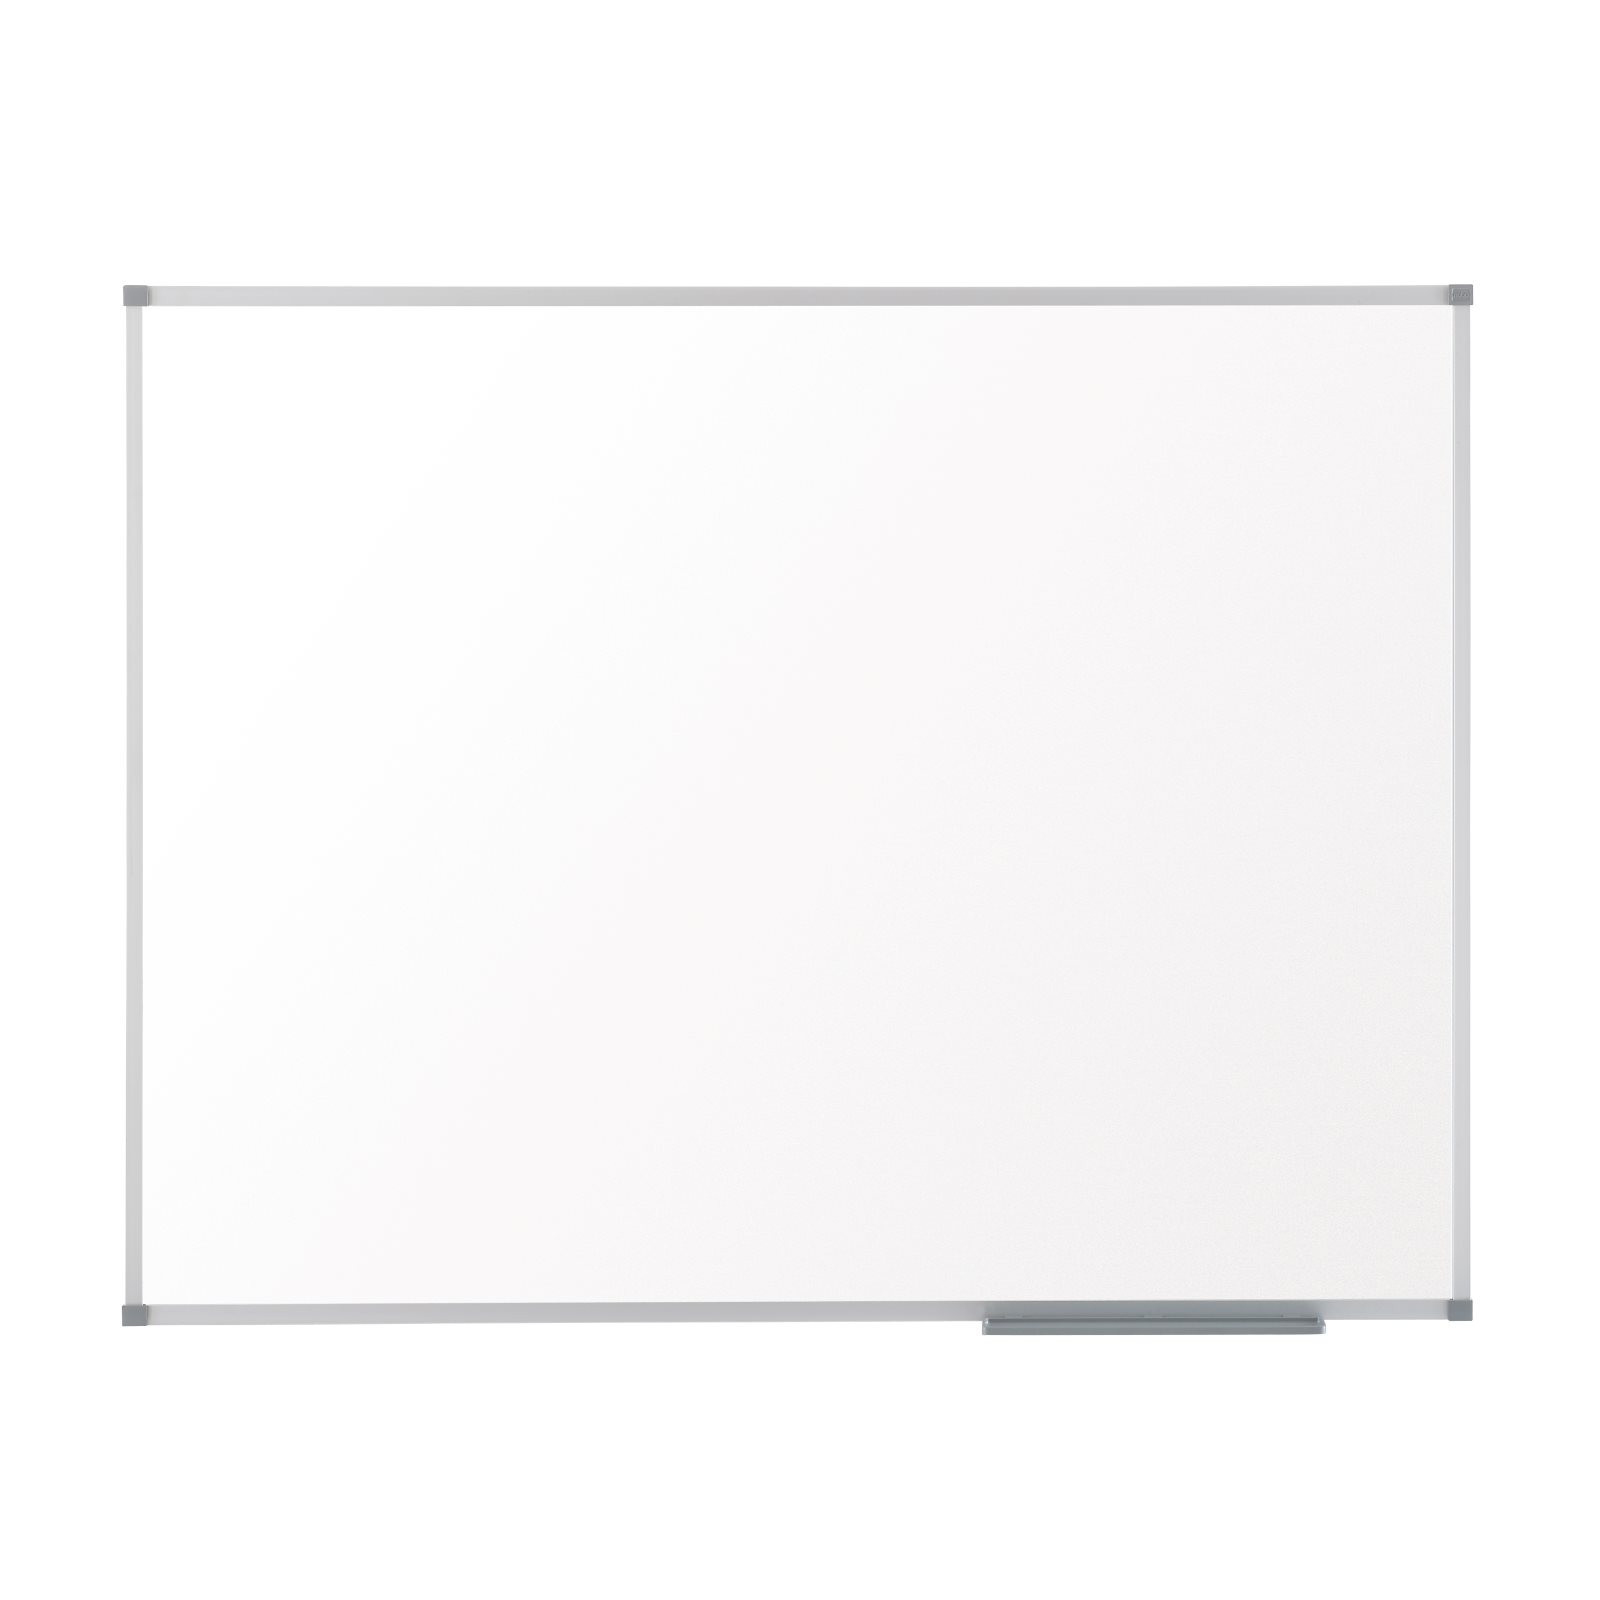 Photos - Dry Erase Board / Flipchart Nobo Basic Steel Magnetic Whiteboard 1200x900mm with Basic Trim 1905211 